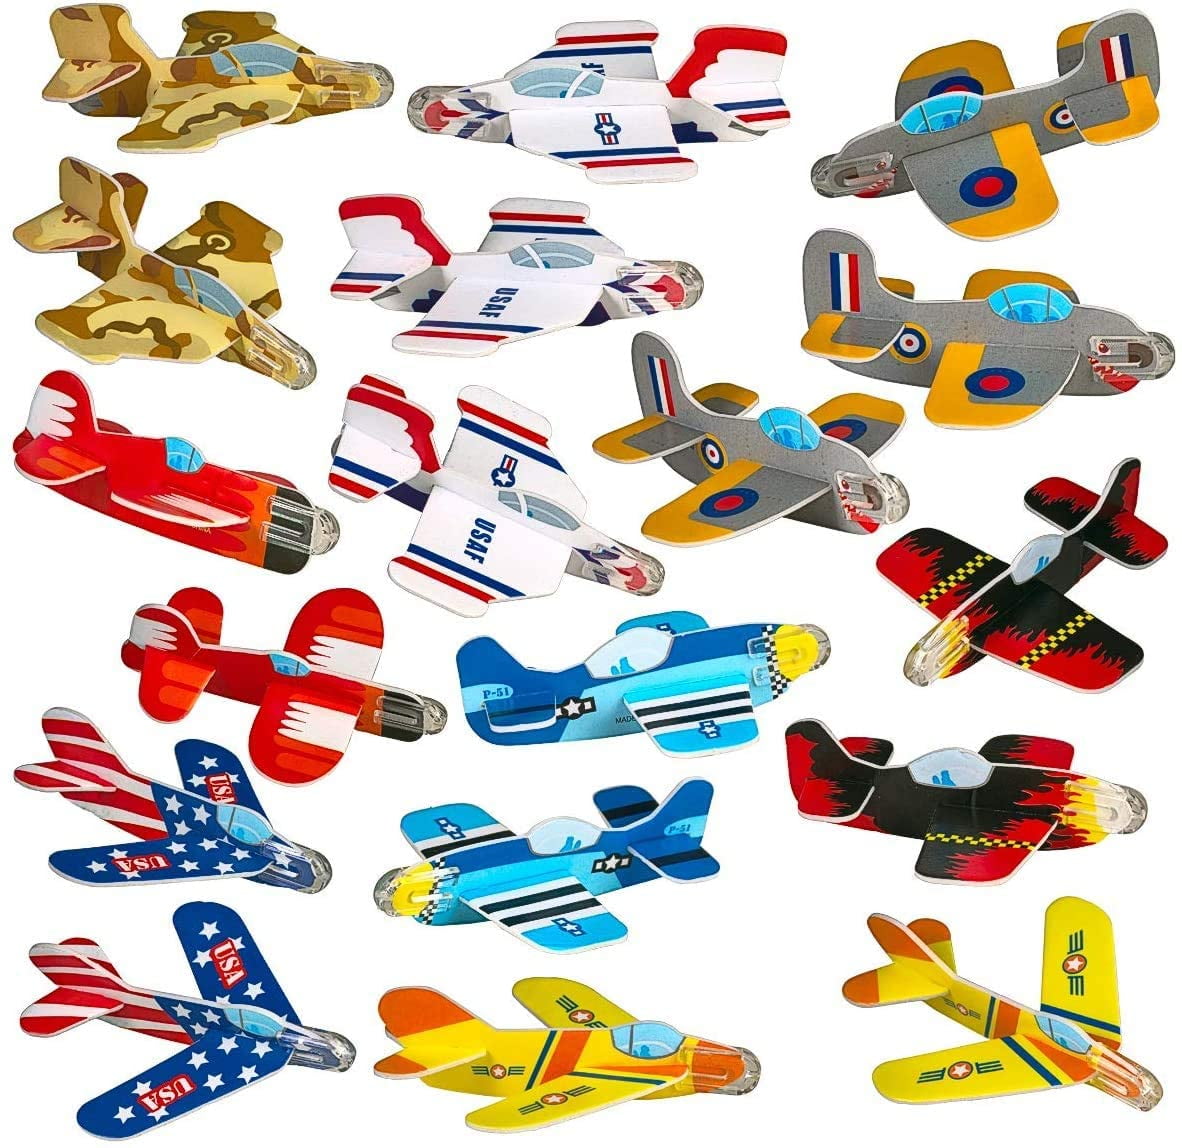 Flying Superhero Gliders Plane Party Bag Stocking Pinata Filler Toy Kids Gift 